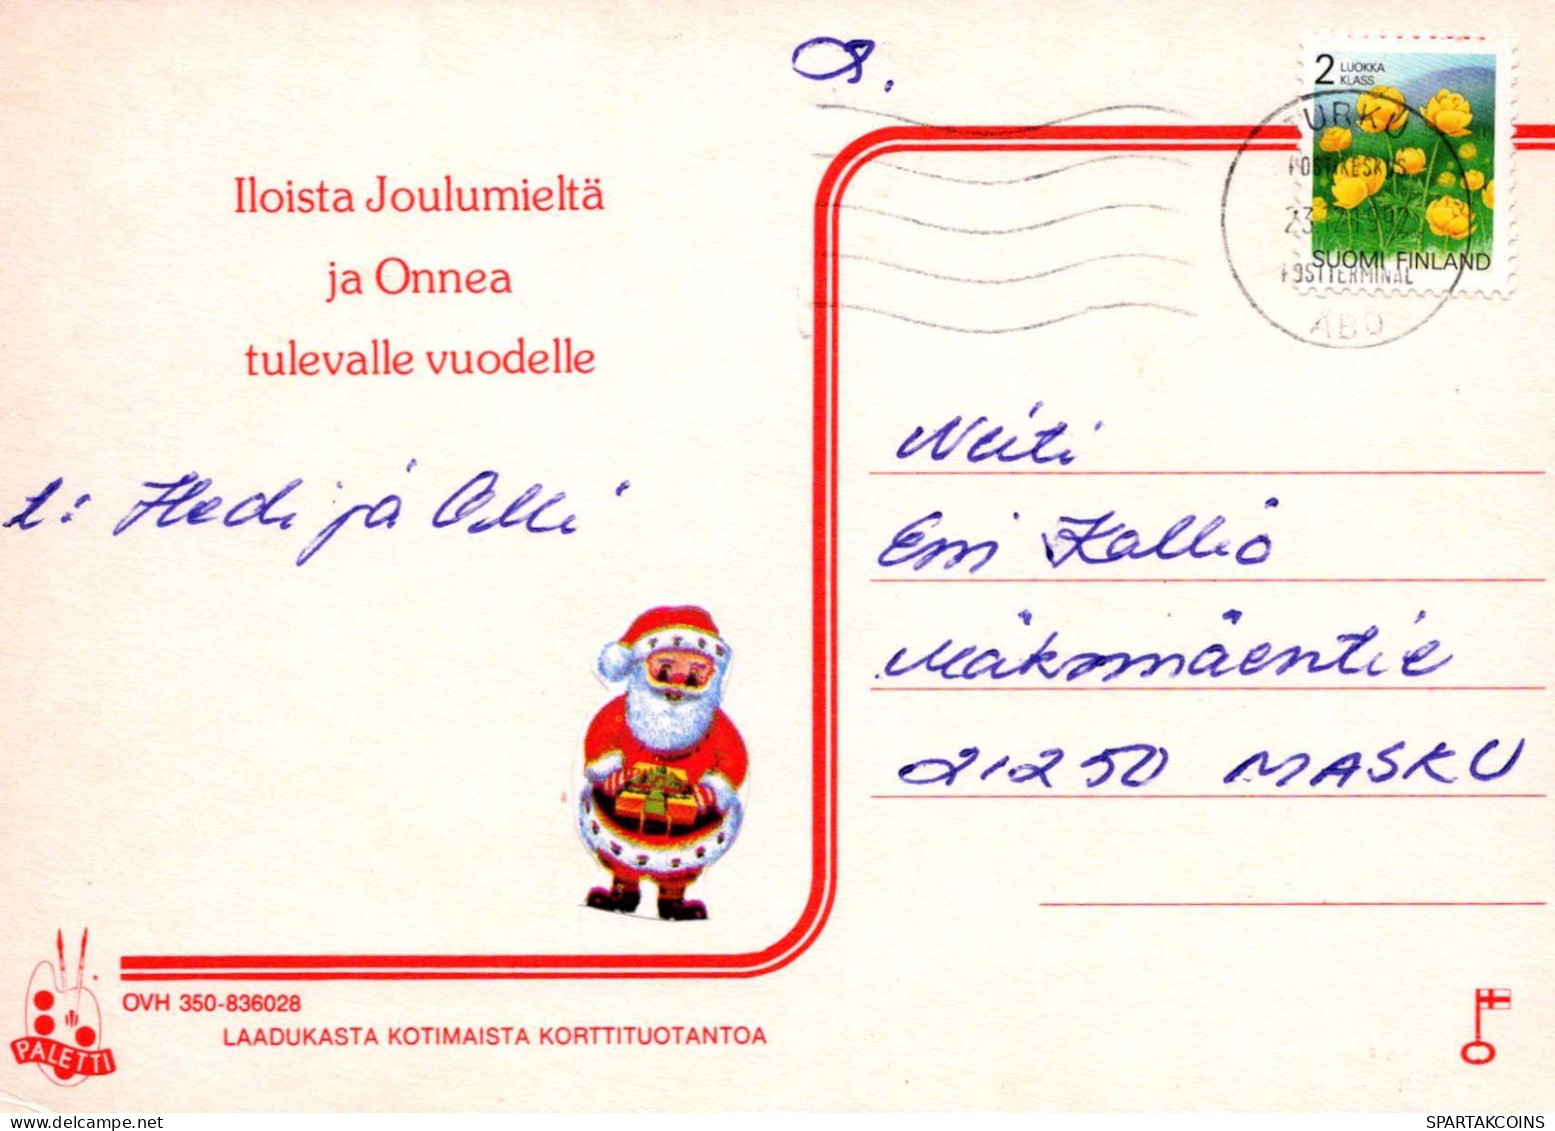 SANTA CLAUS Happy New Year Christmas Vintage Postcard CPSM #PBB072.A - Santa Claus